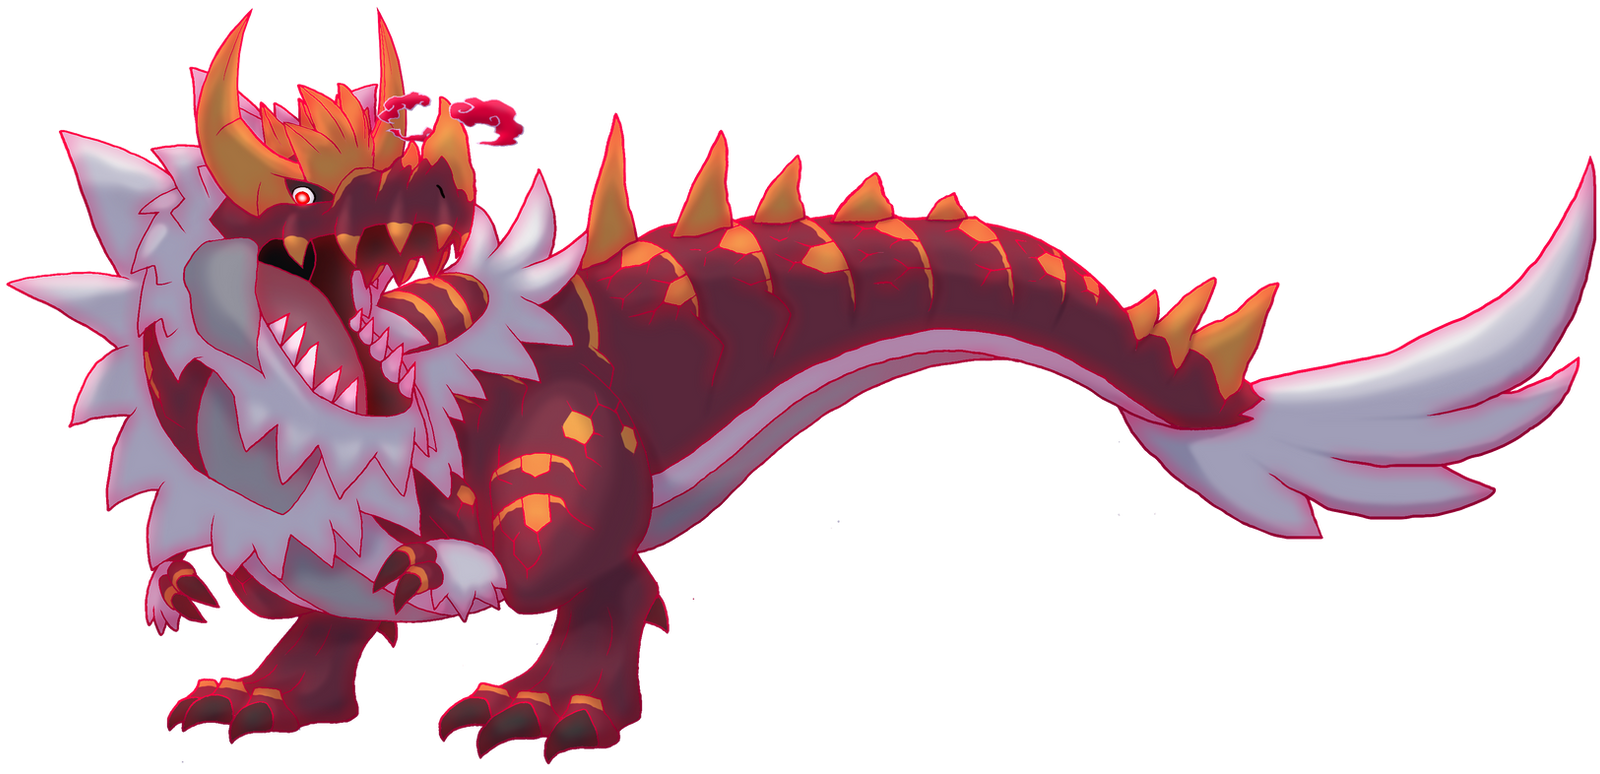 Dragon Type Collab: Shiny Mega Charizard X by LaneyWRL on DeviantArt